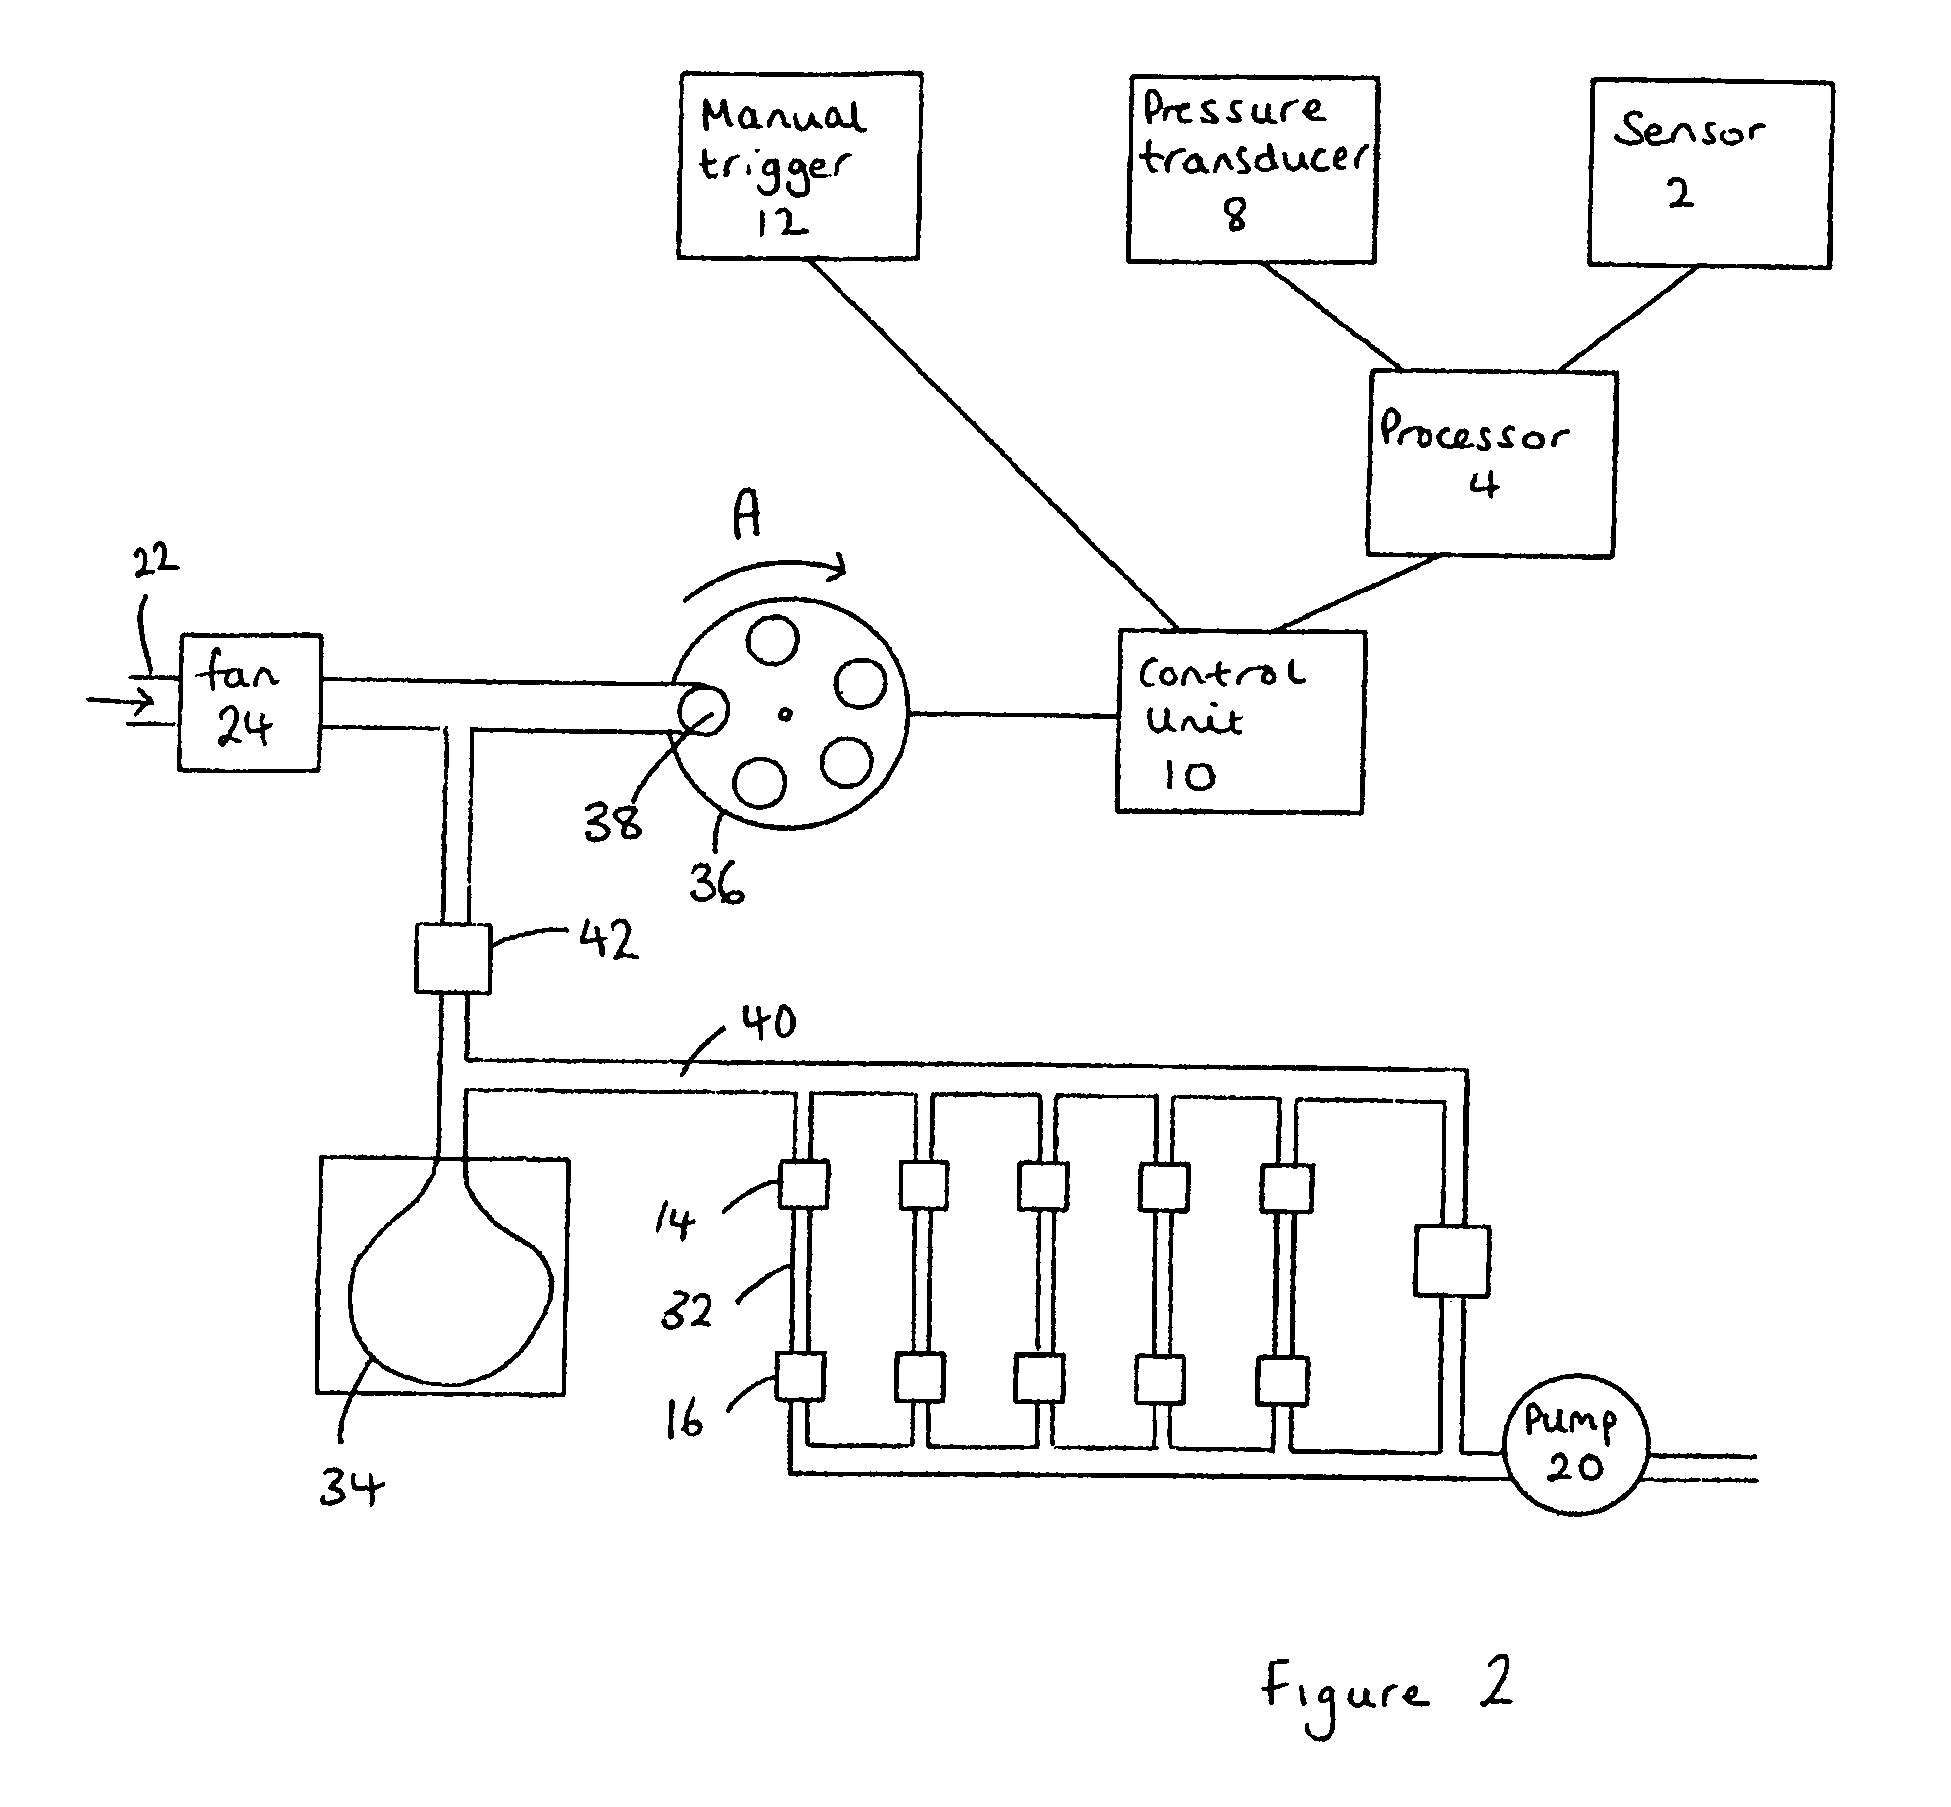 Apparatus and method for air sampling